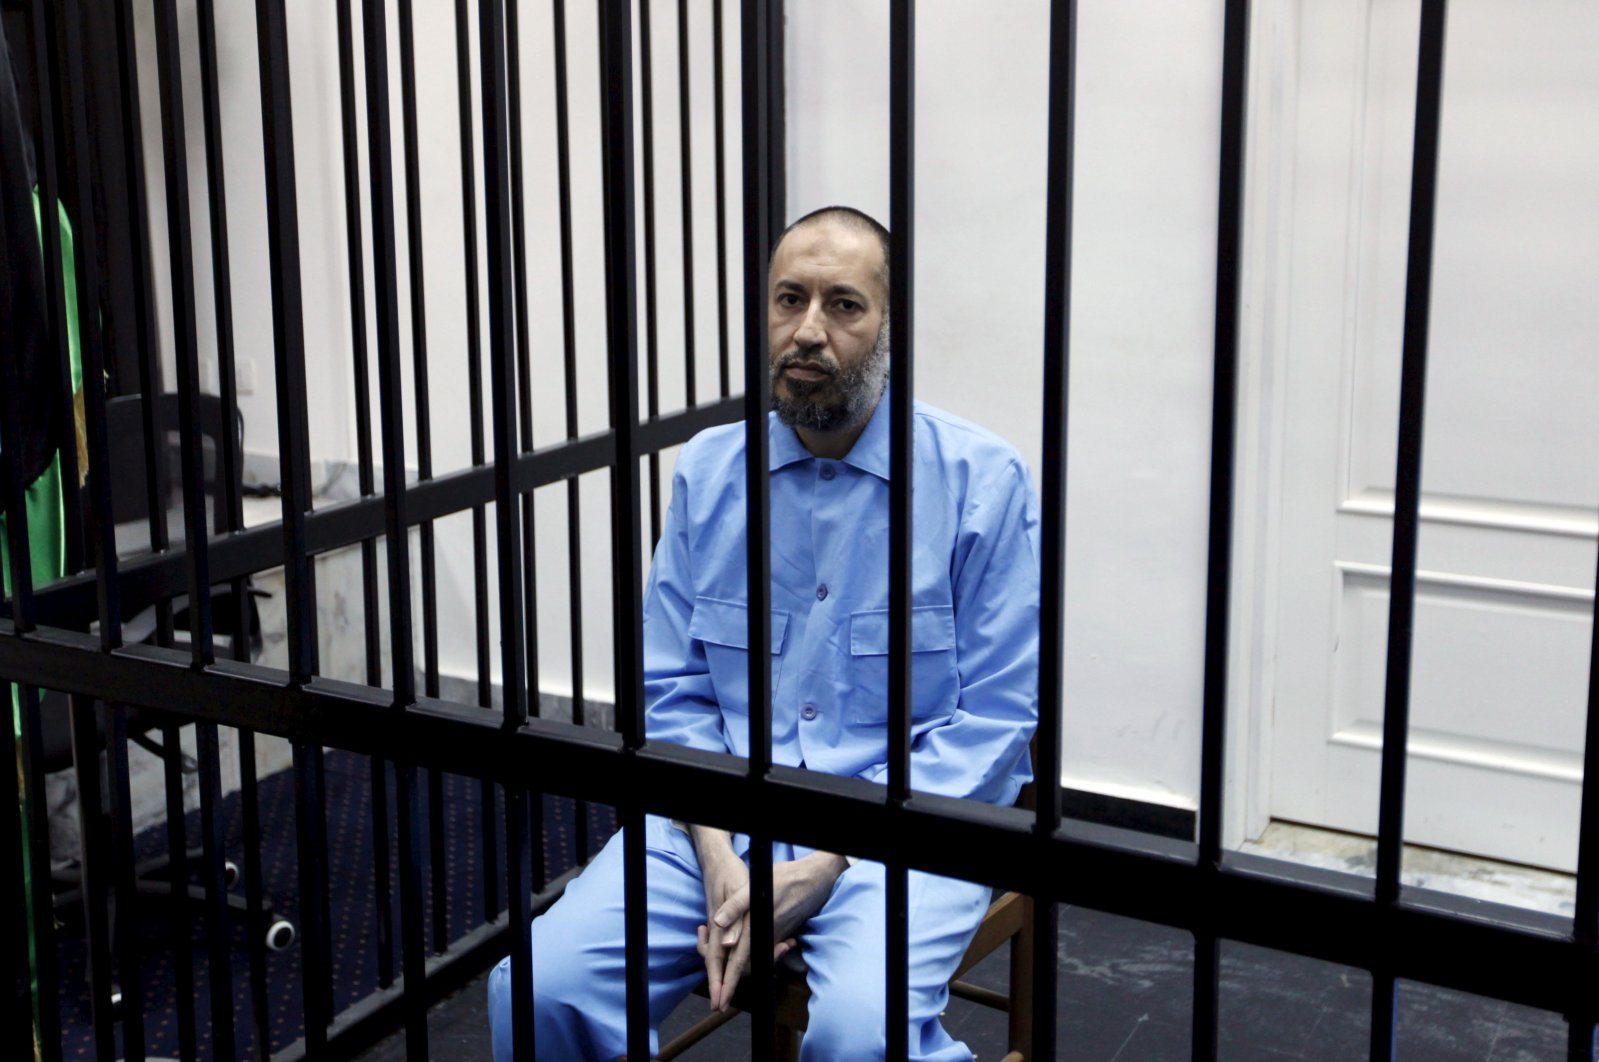 Saadi Gadhafi, son of Moammar Gadhafi, sits behind bars during a hearing at a courtroom in Tripoli, Libya, Feb. 7, 2016. (Reuters File Photo)